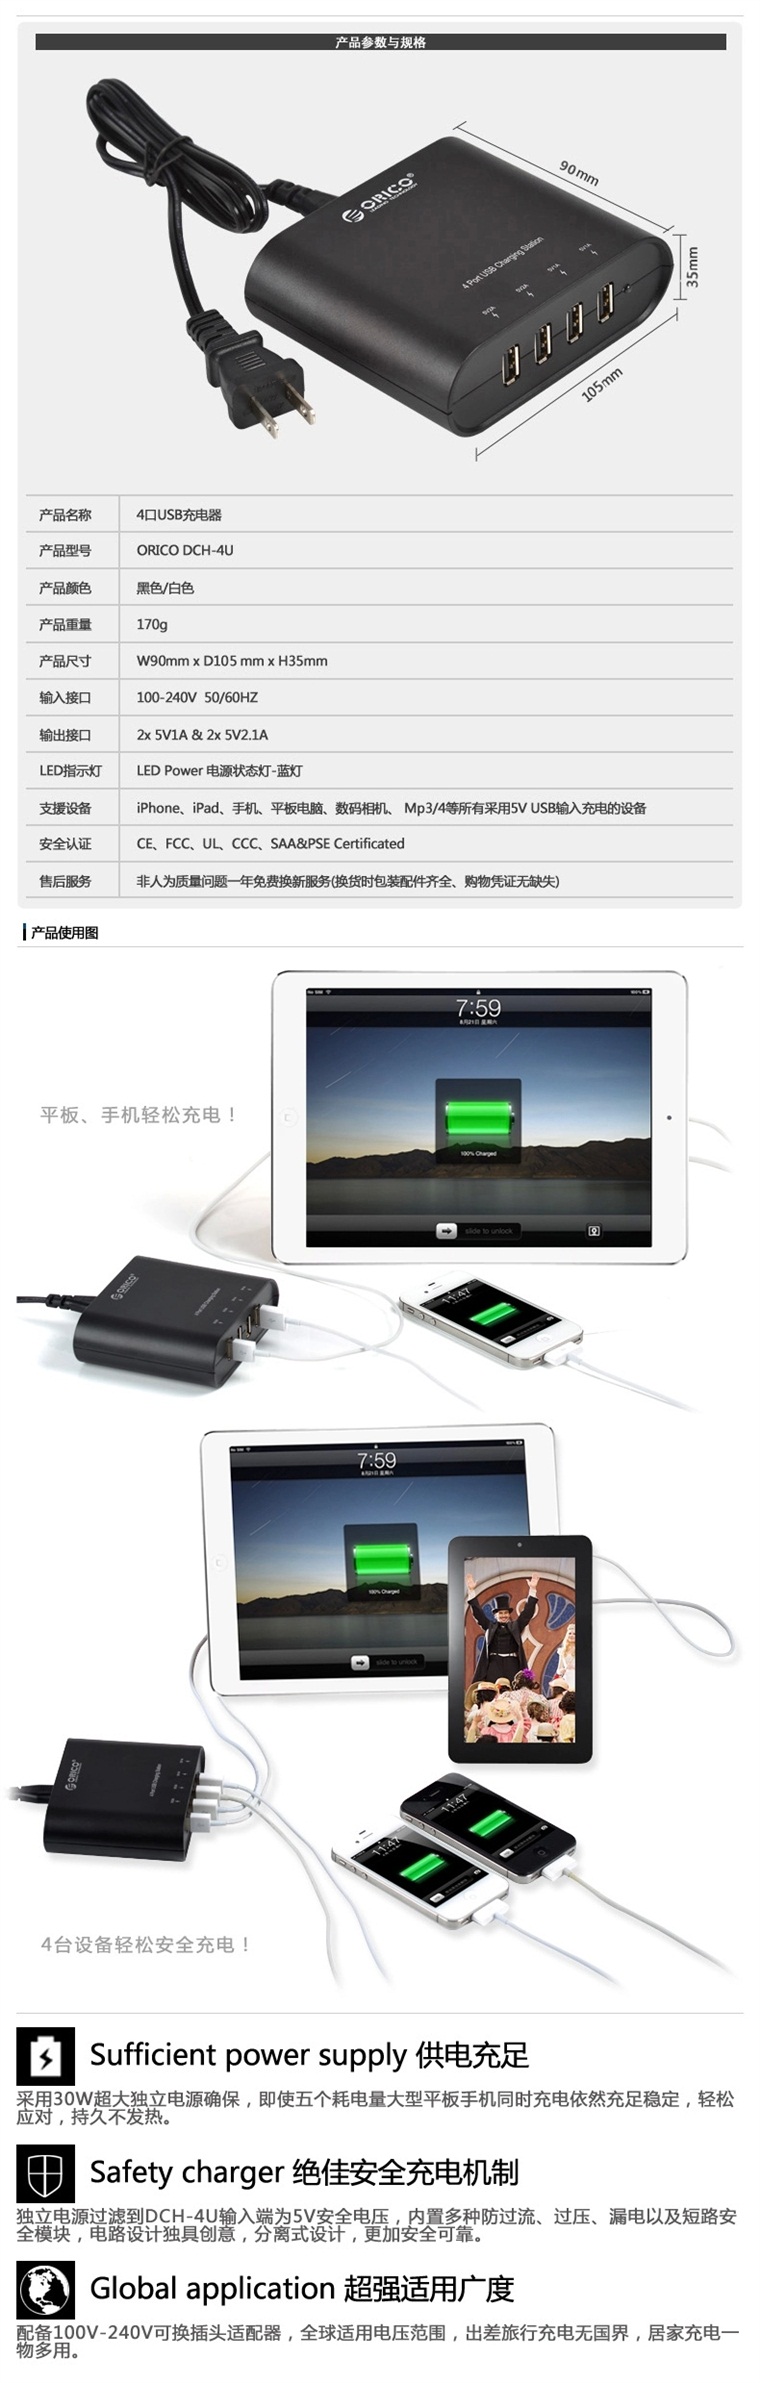 ORICO奥睿科 4口USB设备充电器 DCH-4U 手机平板充电适配器5V